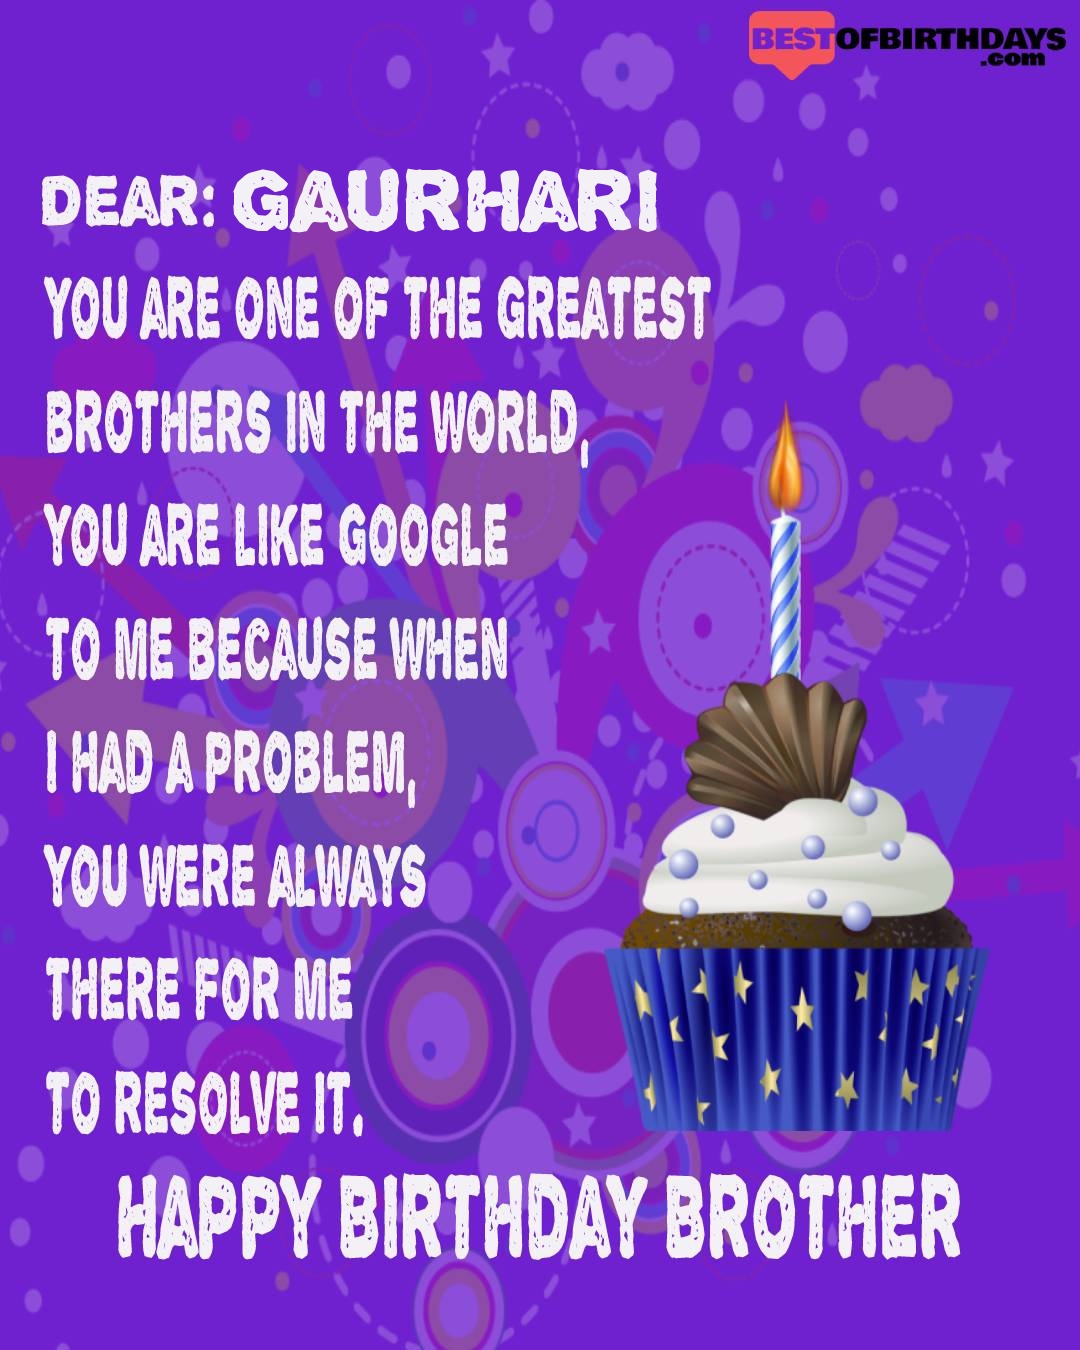 Happy birthday gaurhari bhai brother bro